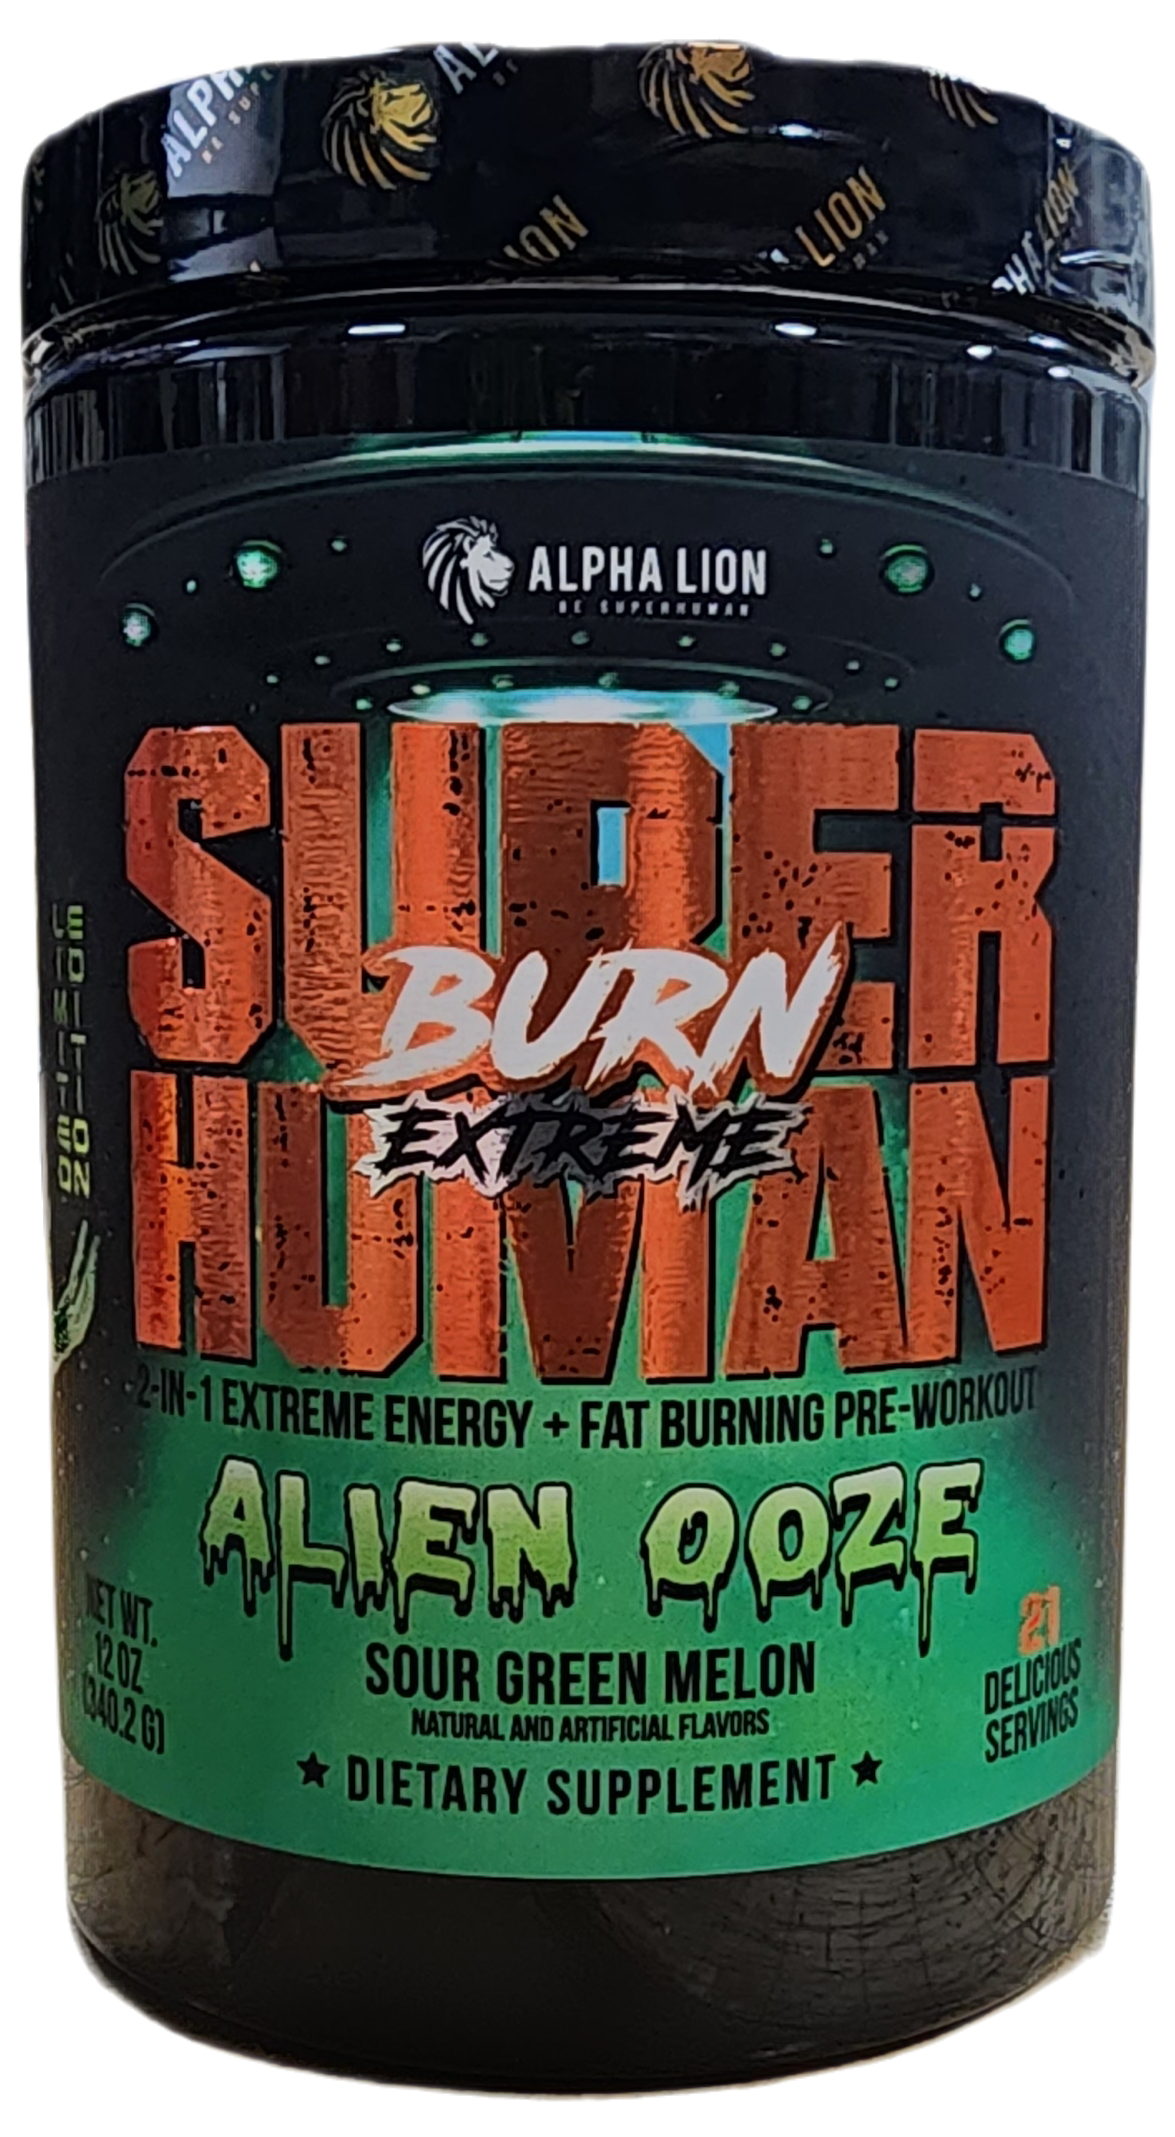 Alpha Lion Superhuman Burn Extreme (Limited Edition)